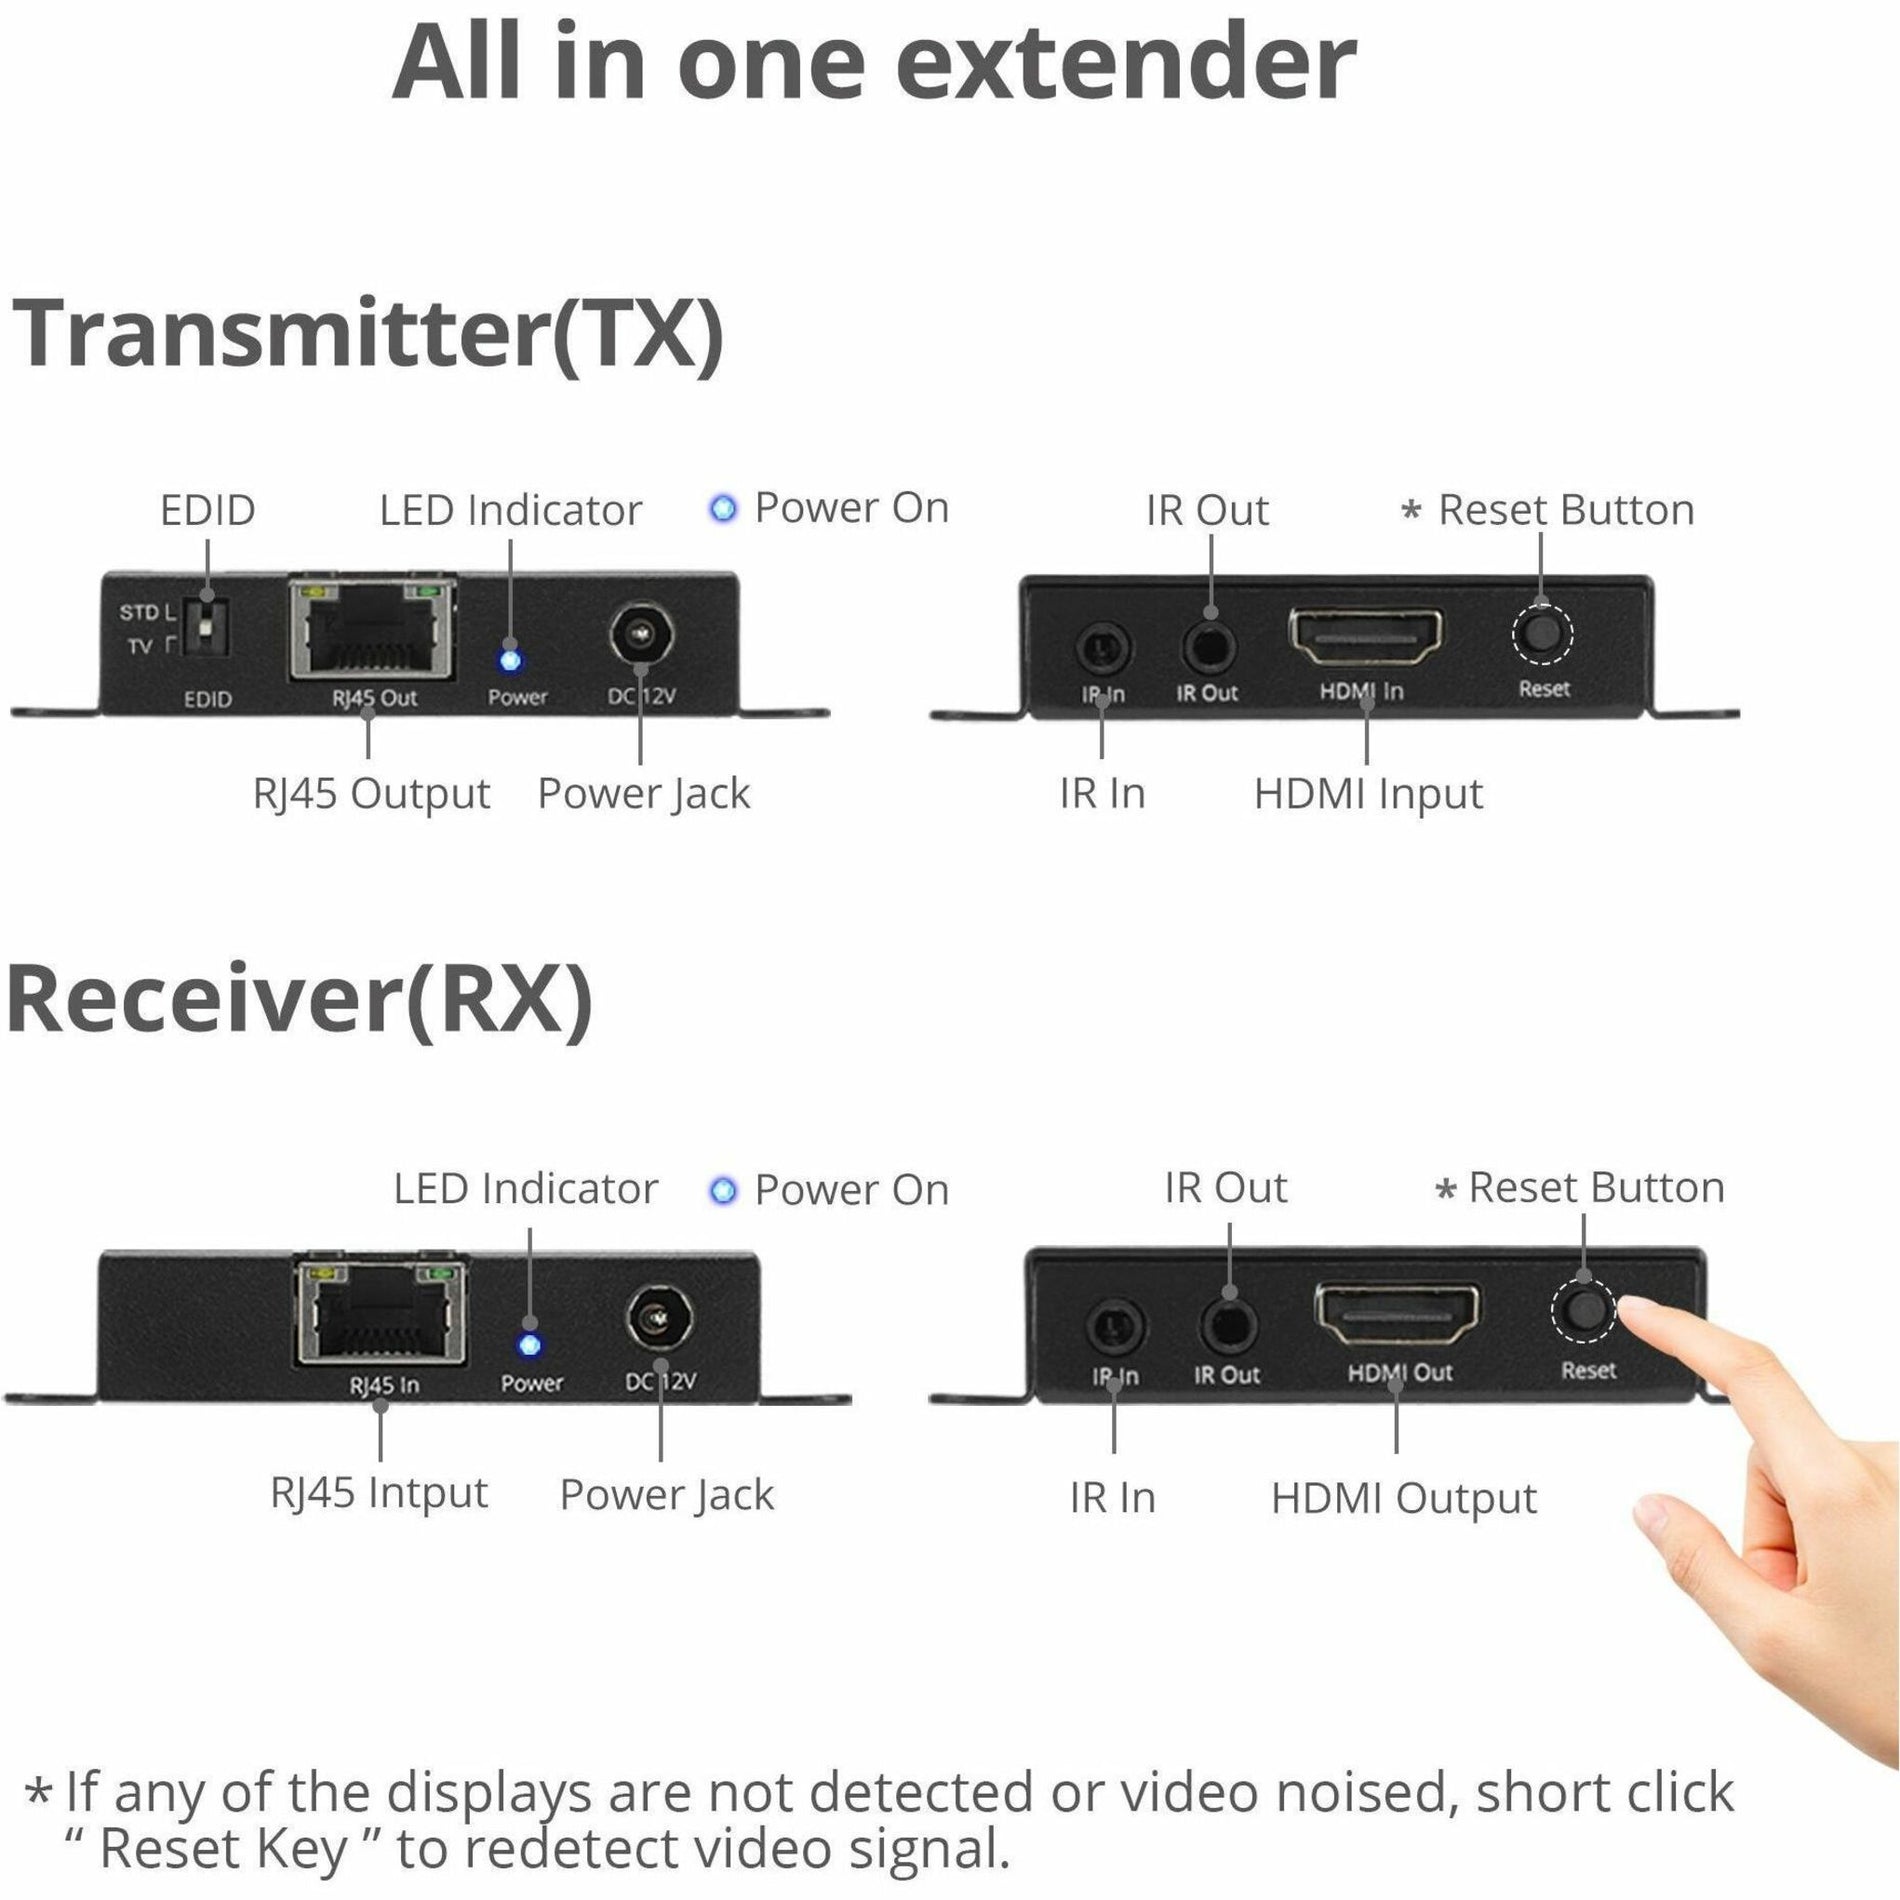 SIIG CE-H27L11-S1 4K120Hz HDMI Extender with IR - Up to 132ft (40M) - Nearly zero latency, Gaming